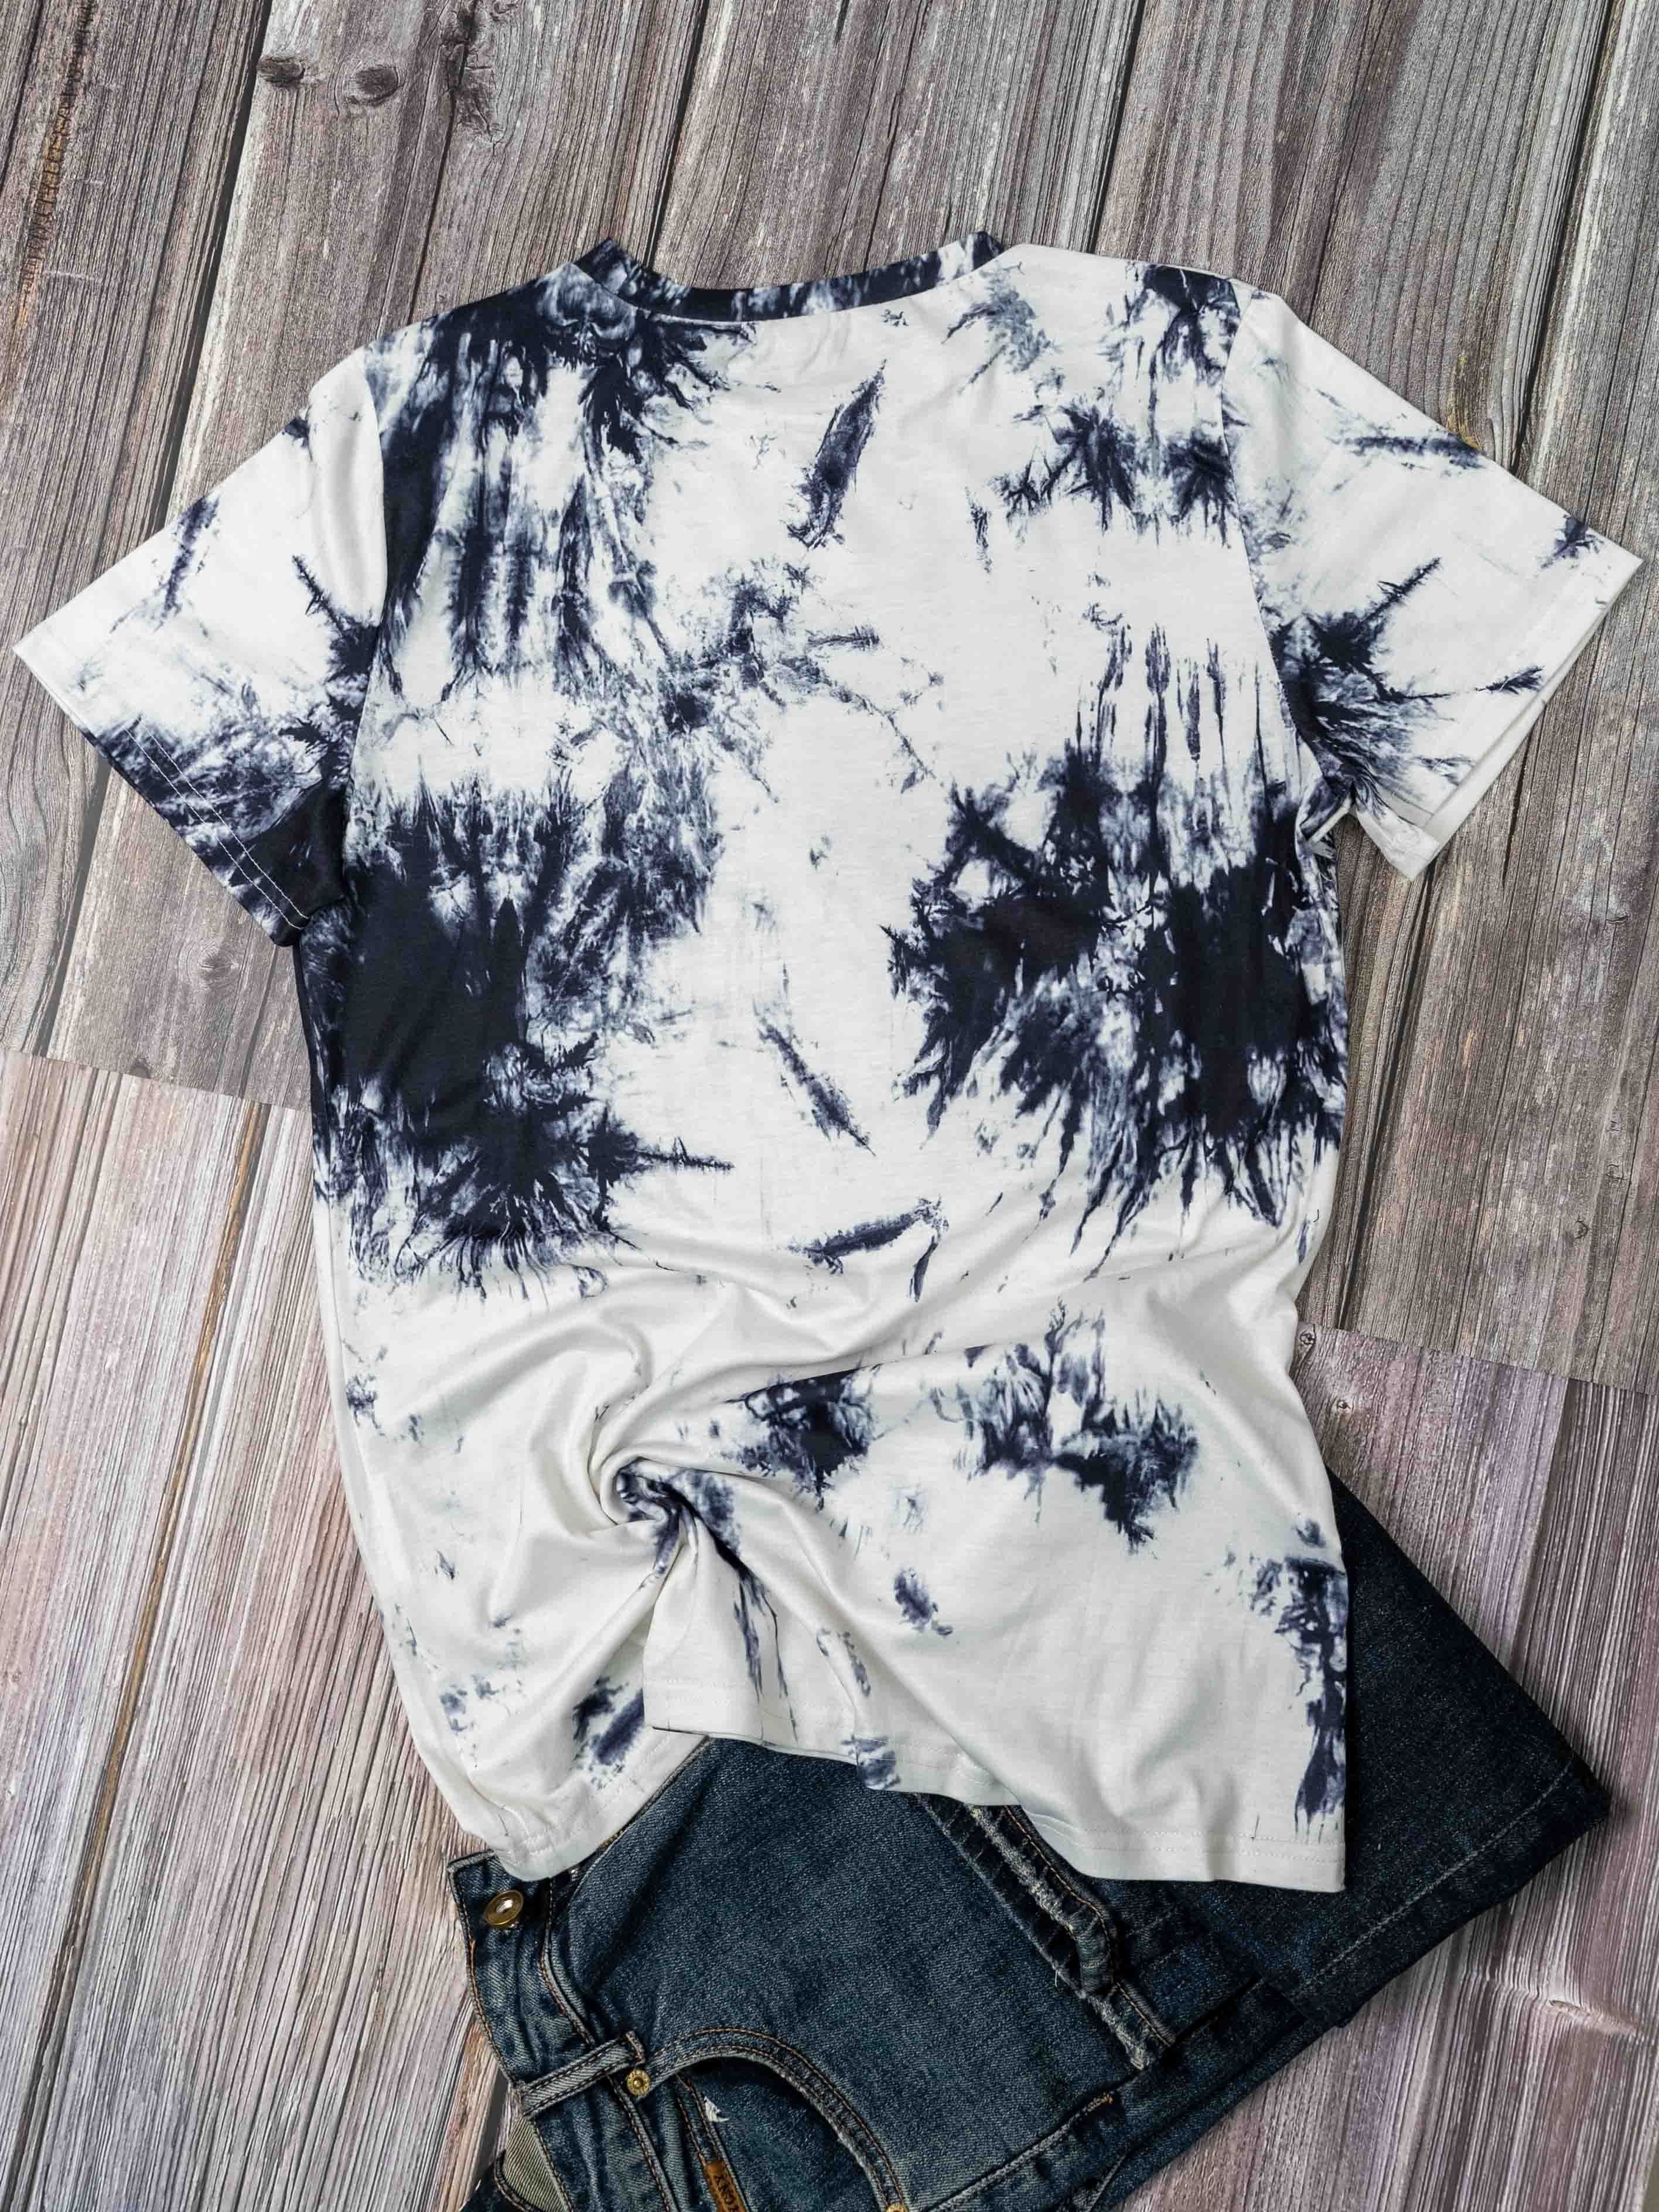 Summer Tshirts Shirts for Women, Short Sleeve Tie Dye Print T